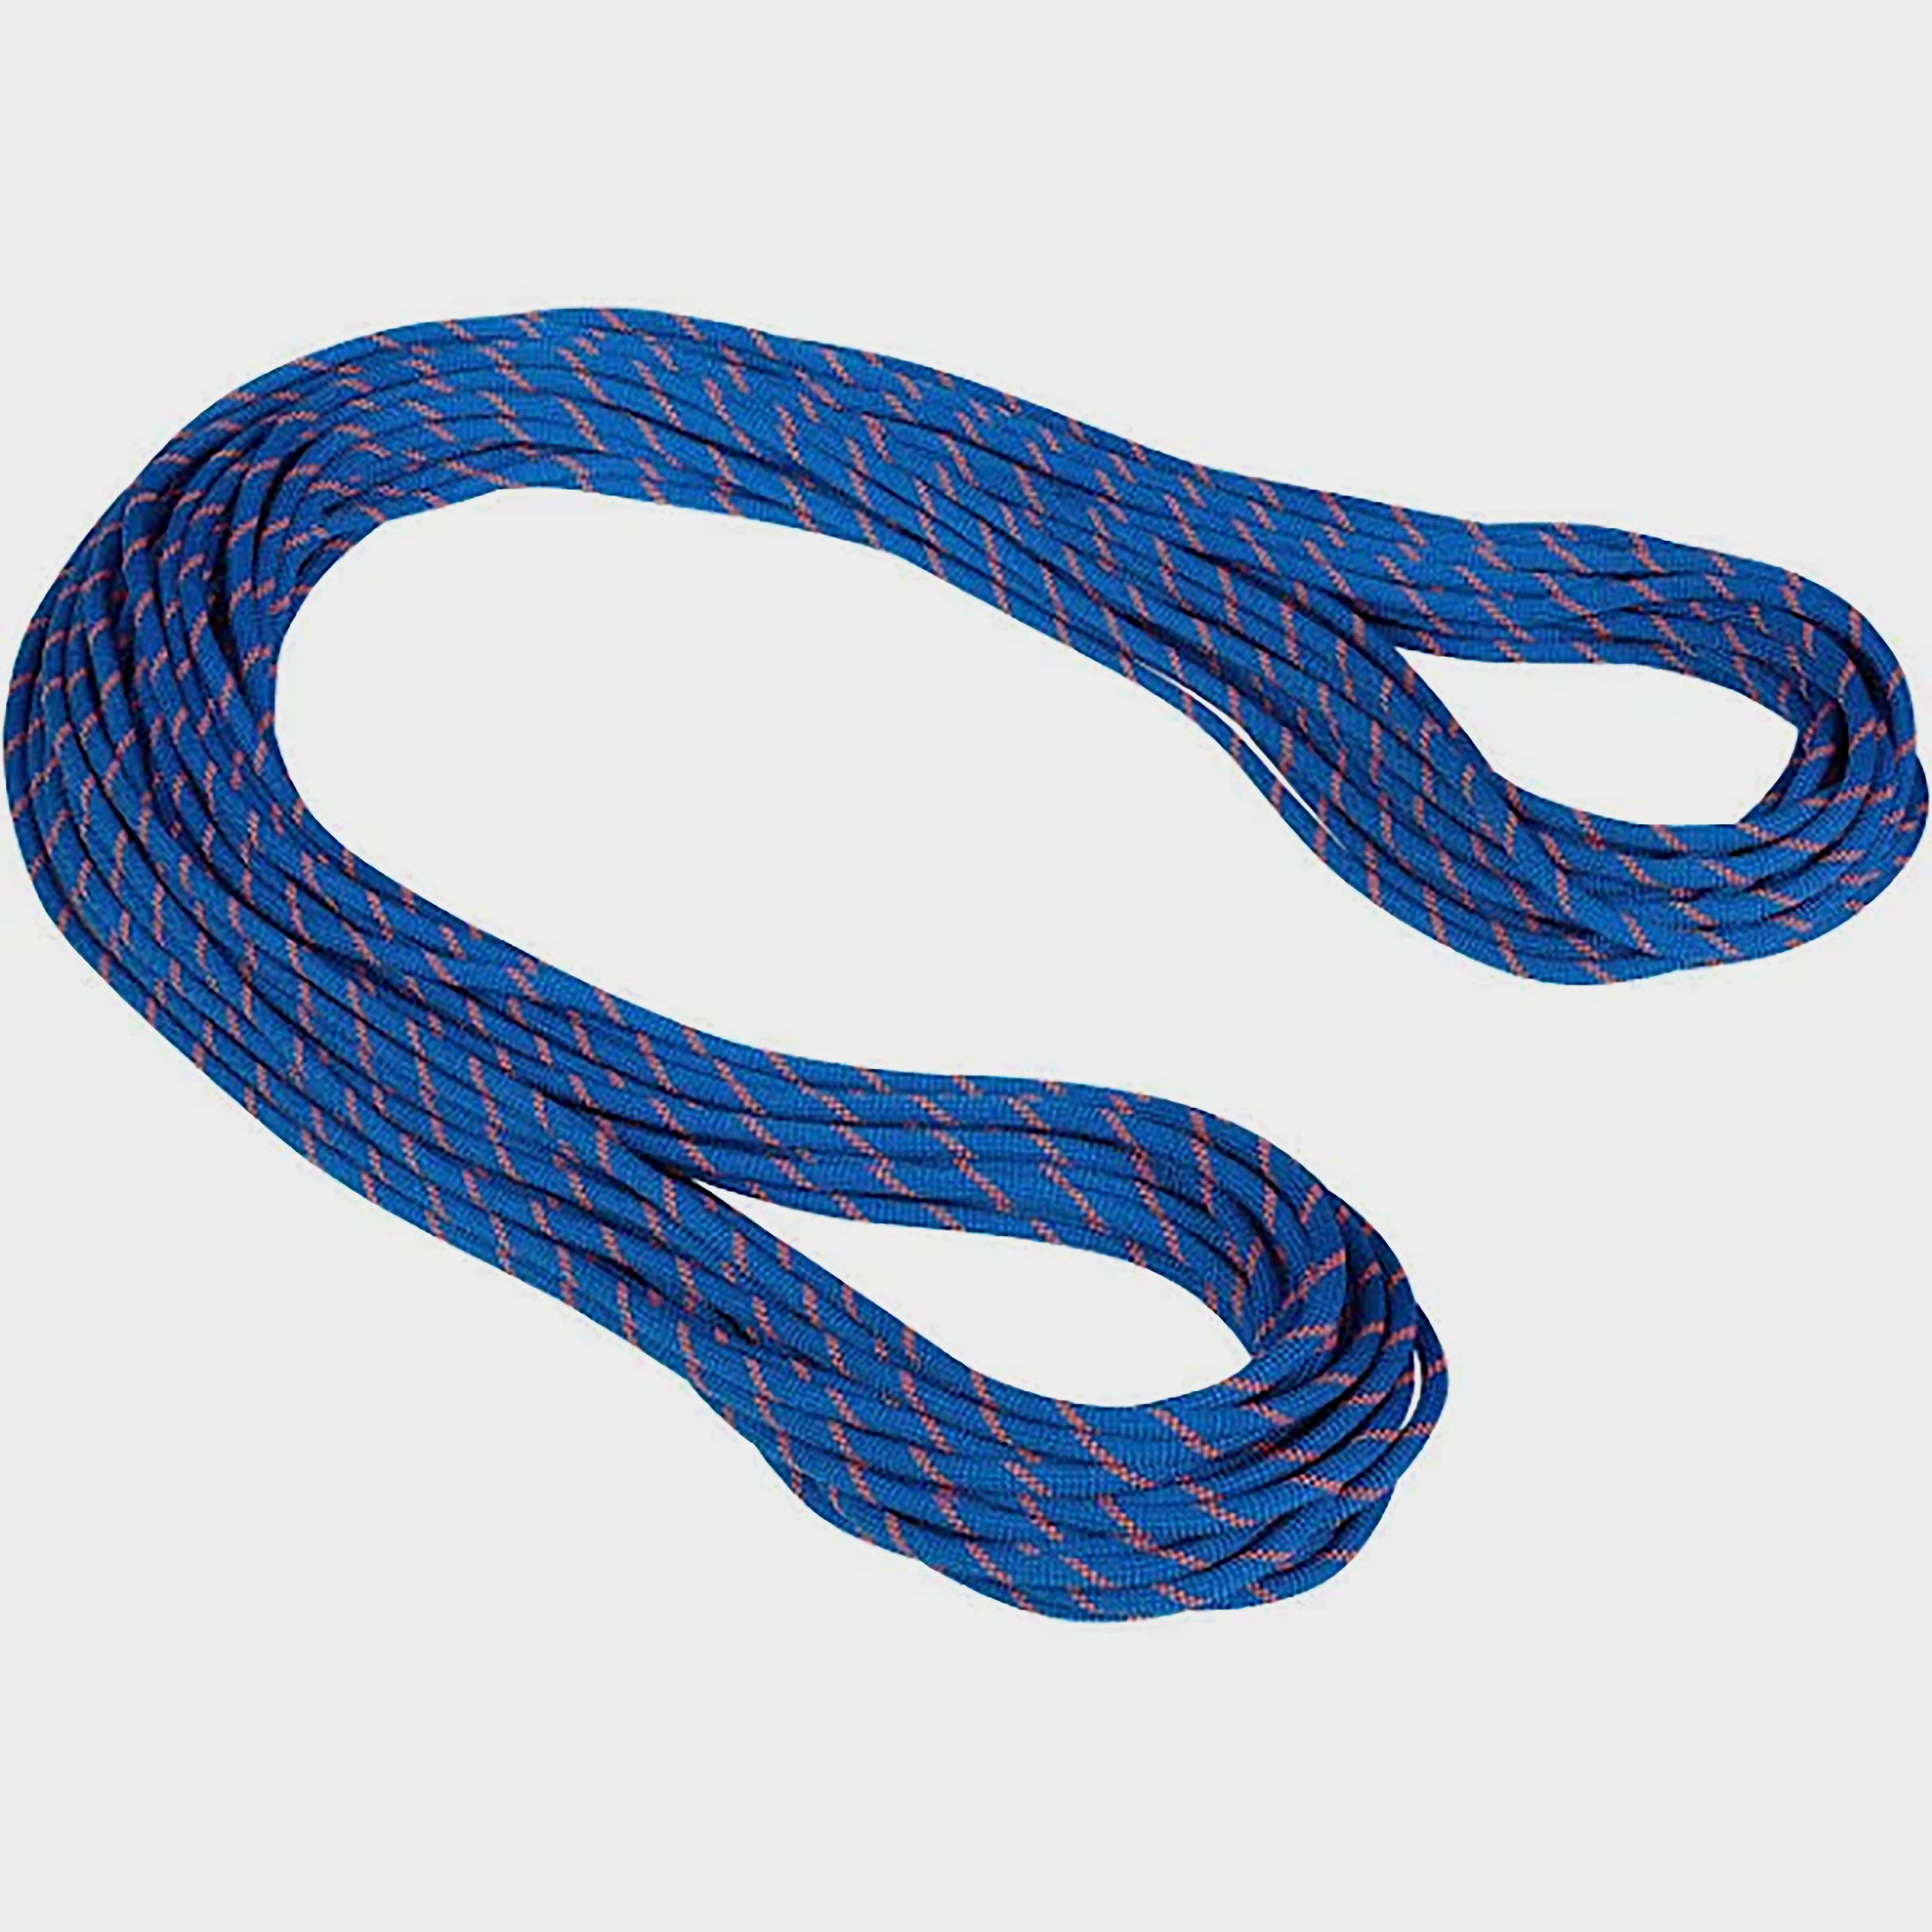 Mammut Alpine Sender Dry Rope 7.5mm - 60m - Blue/6  Blue/6